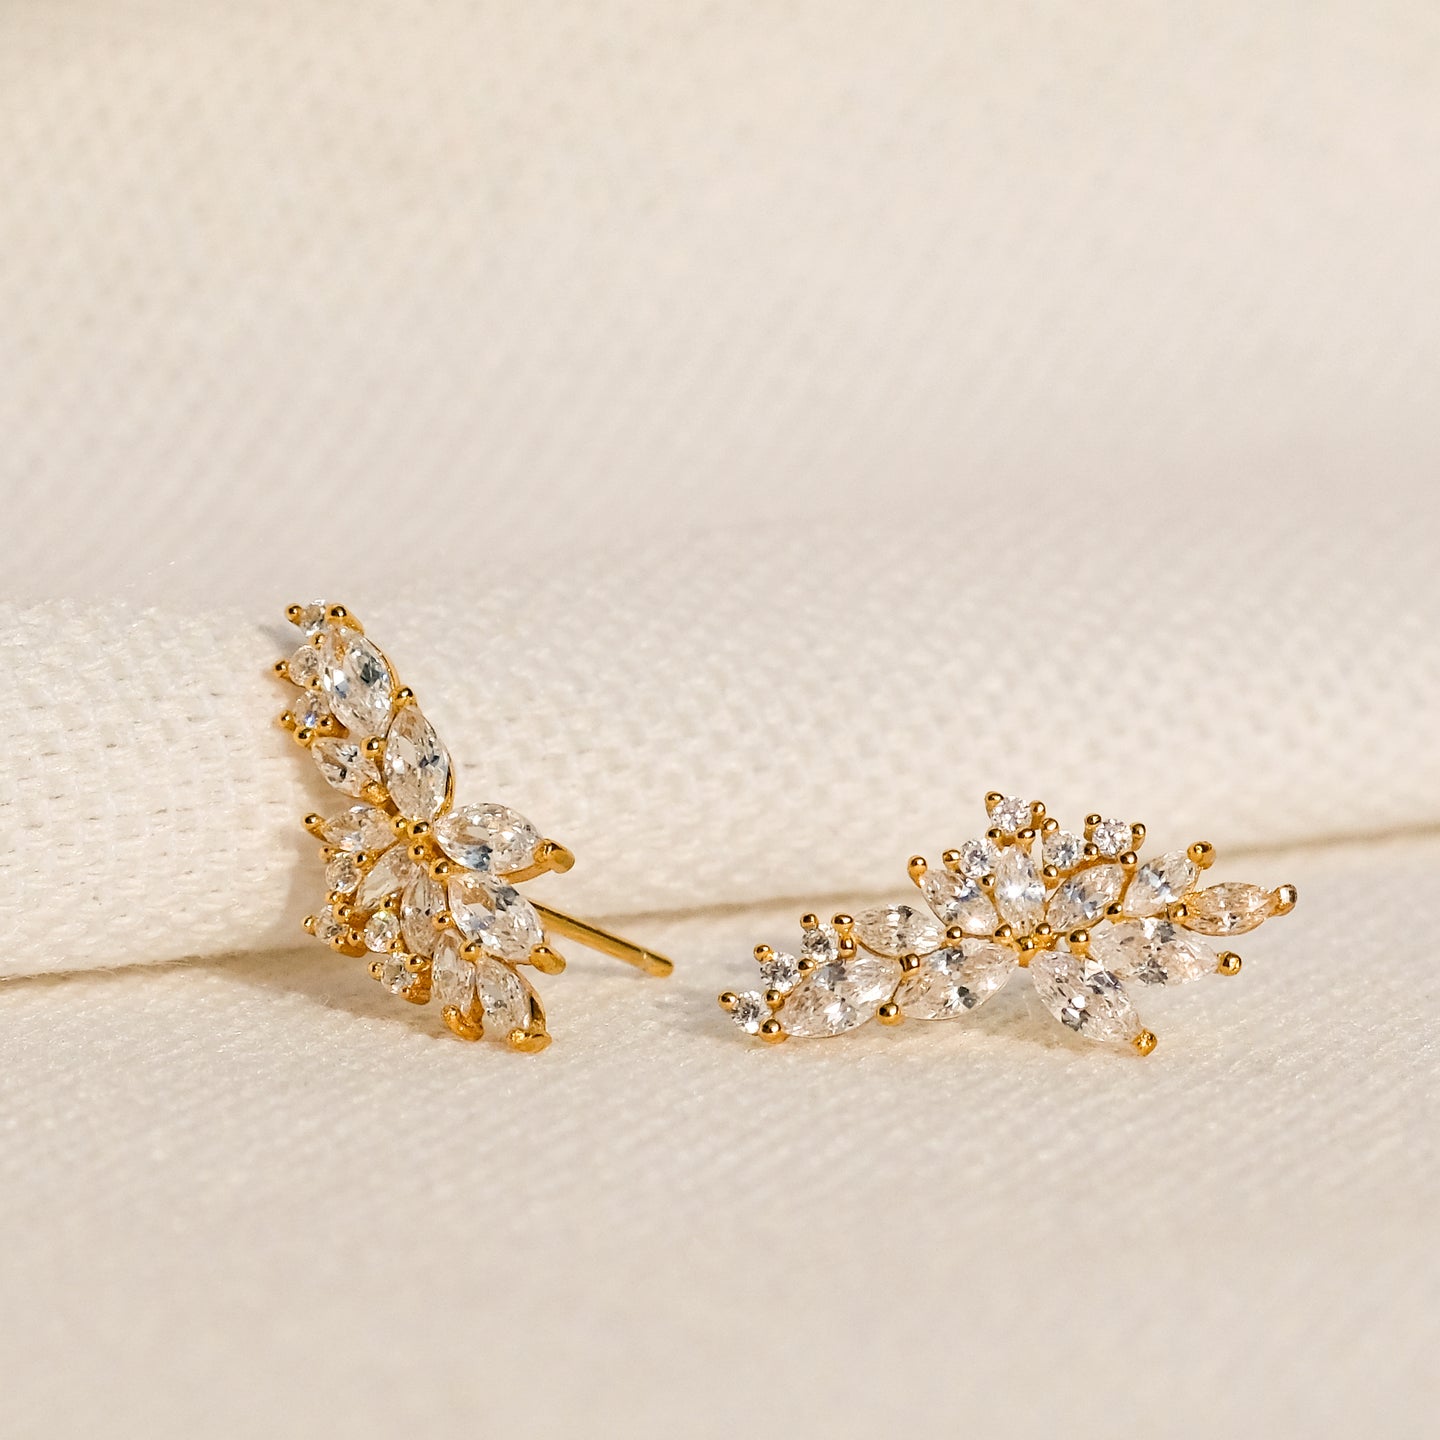 products/petalia-cz-stud-earrings-18k-gold-vermeil-2.jpg